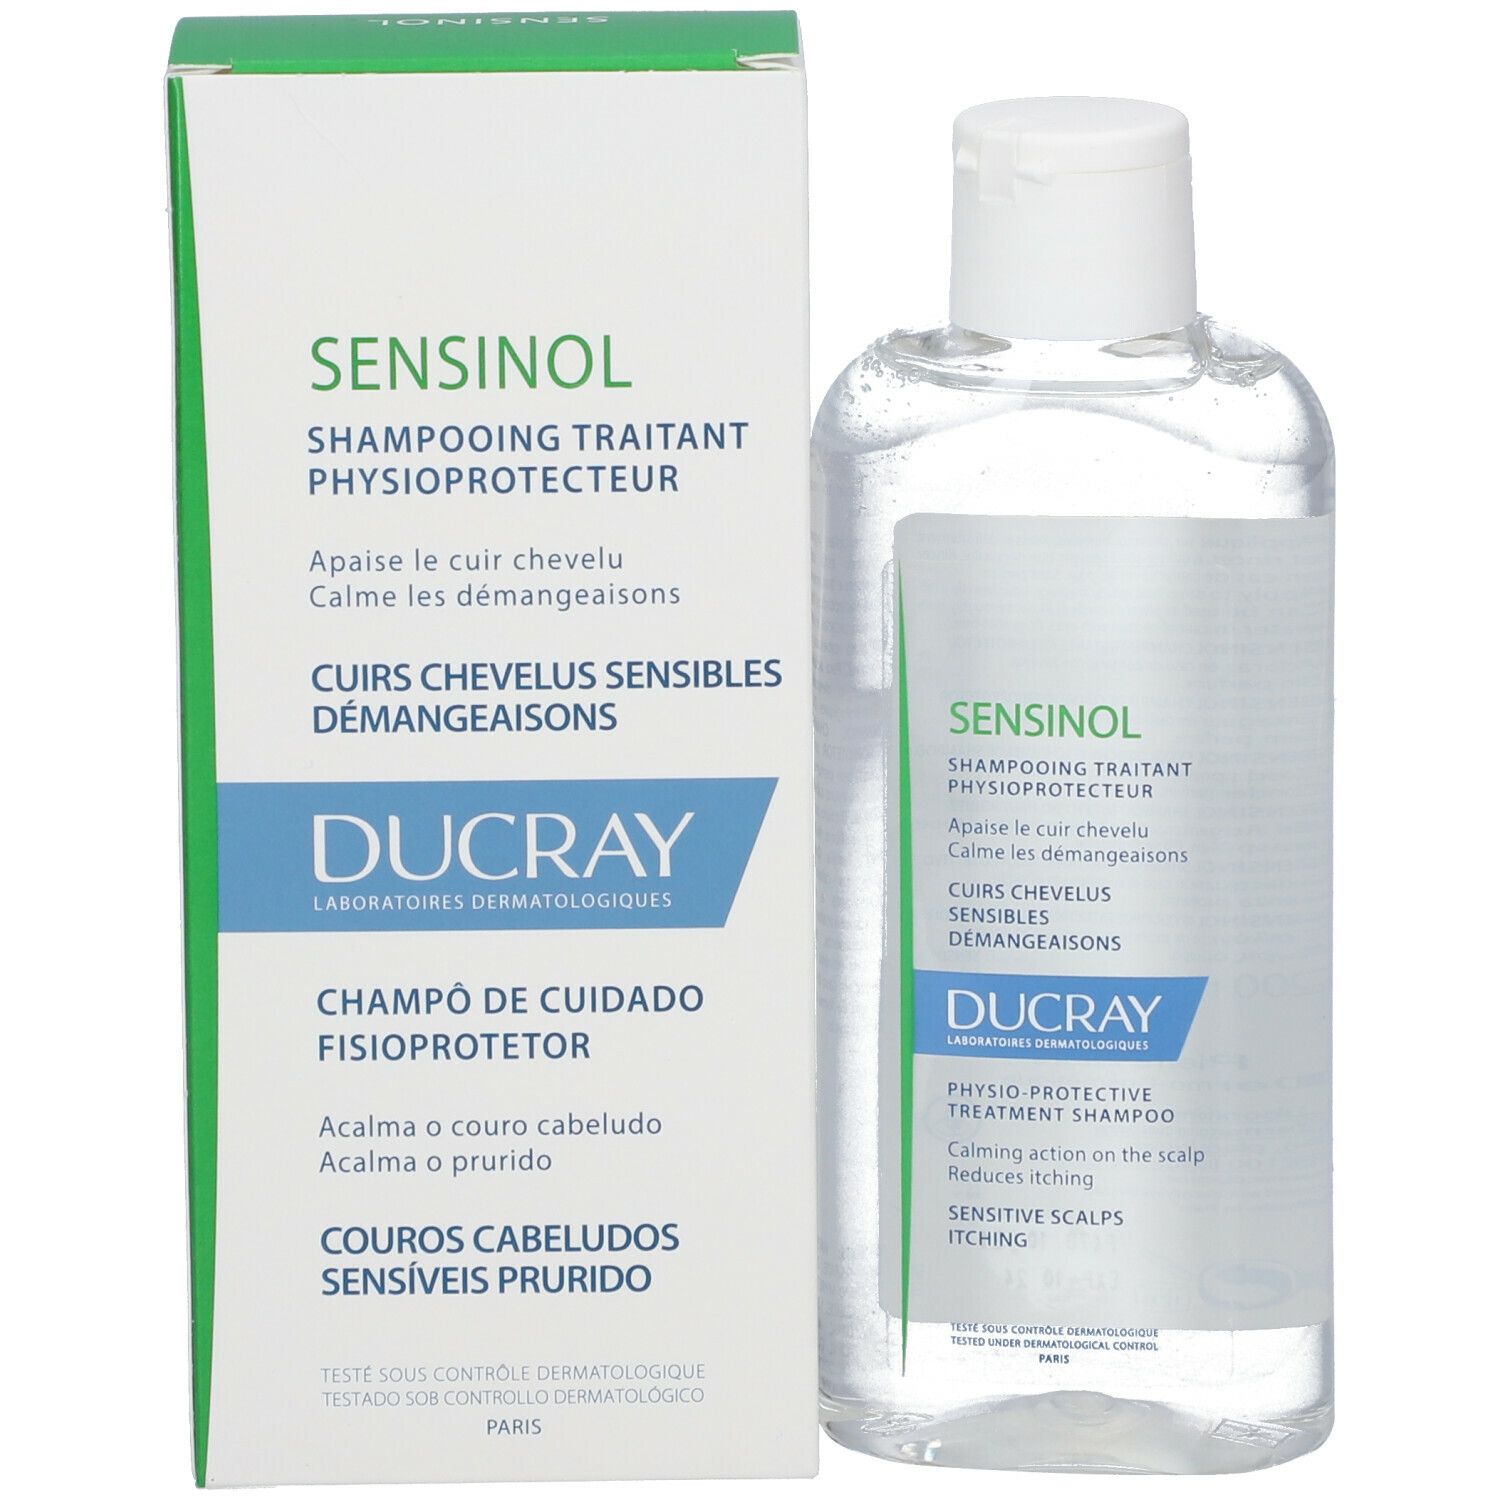 Ducray Sensinol shampooing traitant physioprotecteur